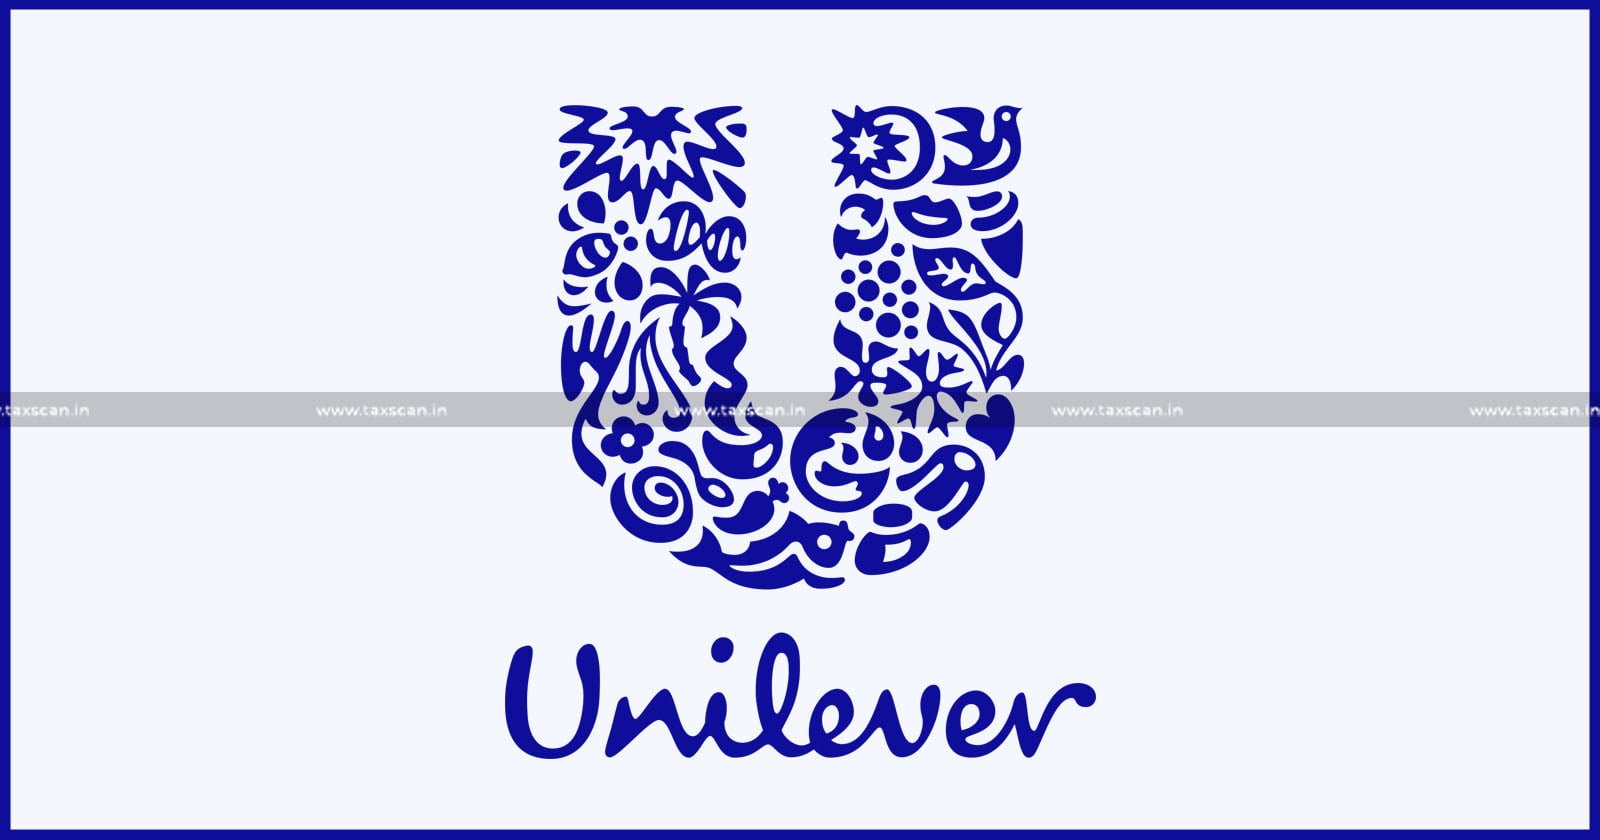 CA - MBA - Vacancies in Unilever -Unilever -CA Vacancy - MBA Vacancy - taxscan